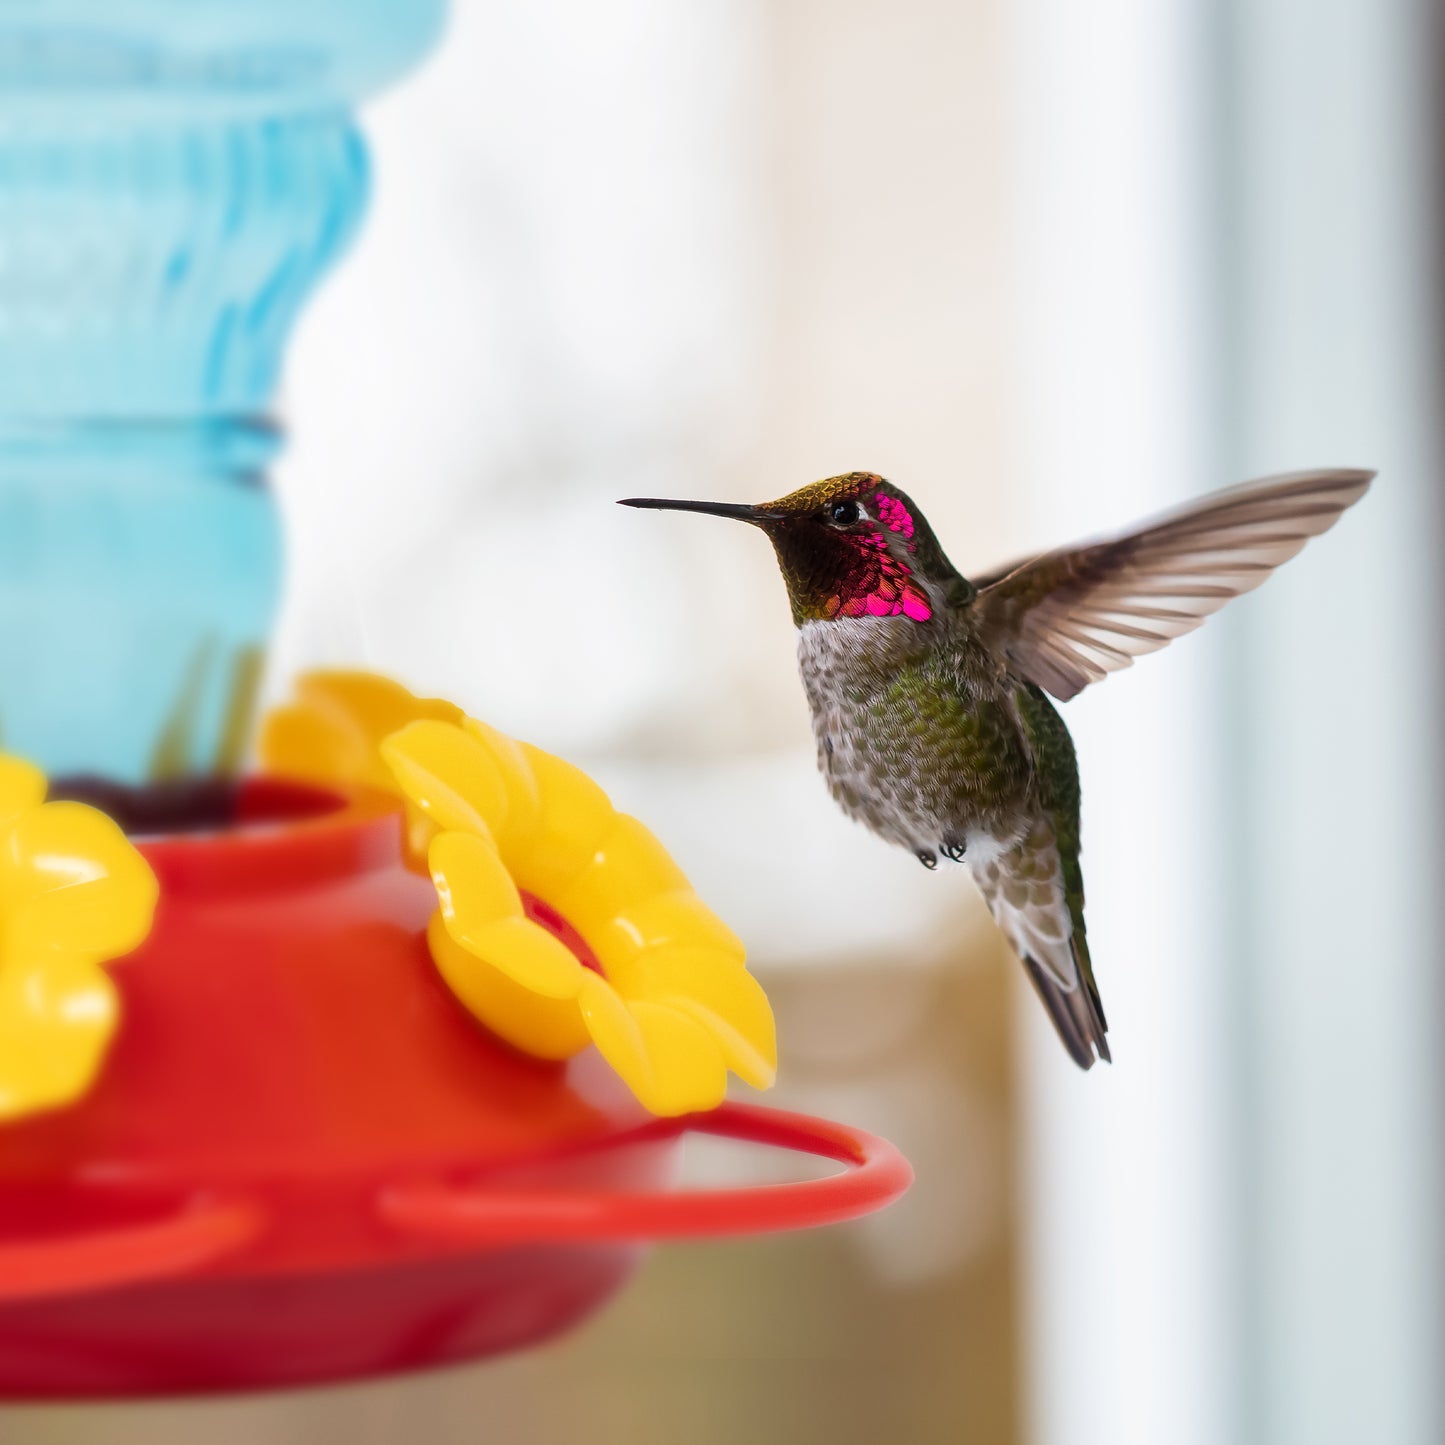 Superior Effect Antique Glass Decorative Hummingbird Feeder